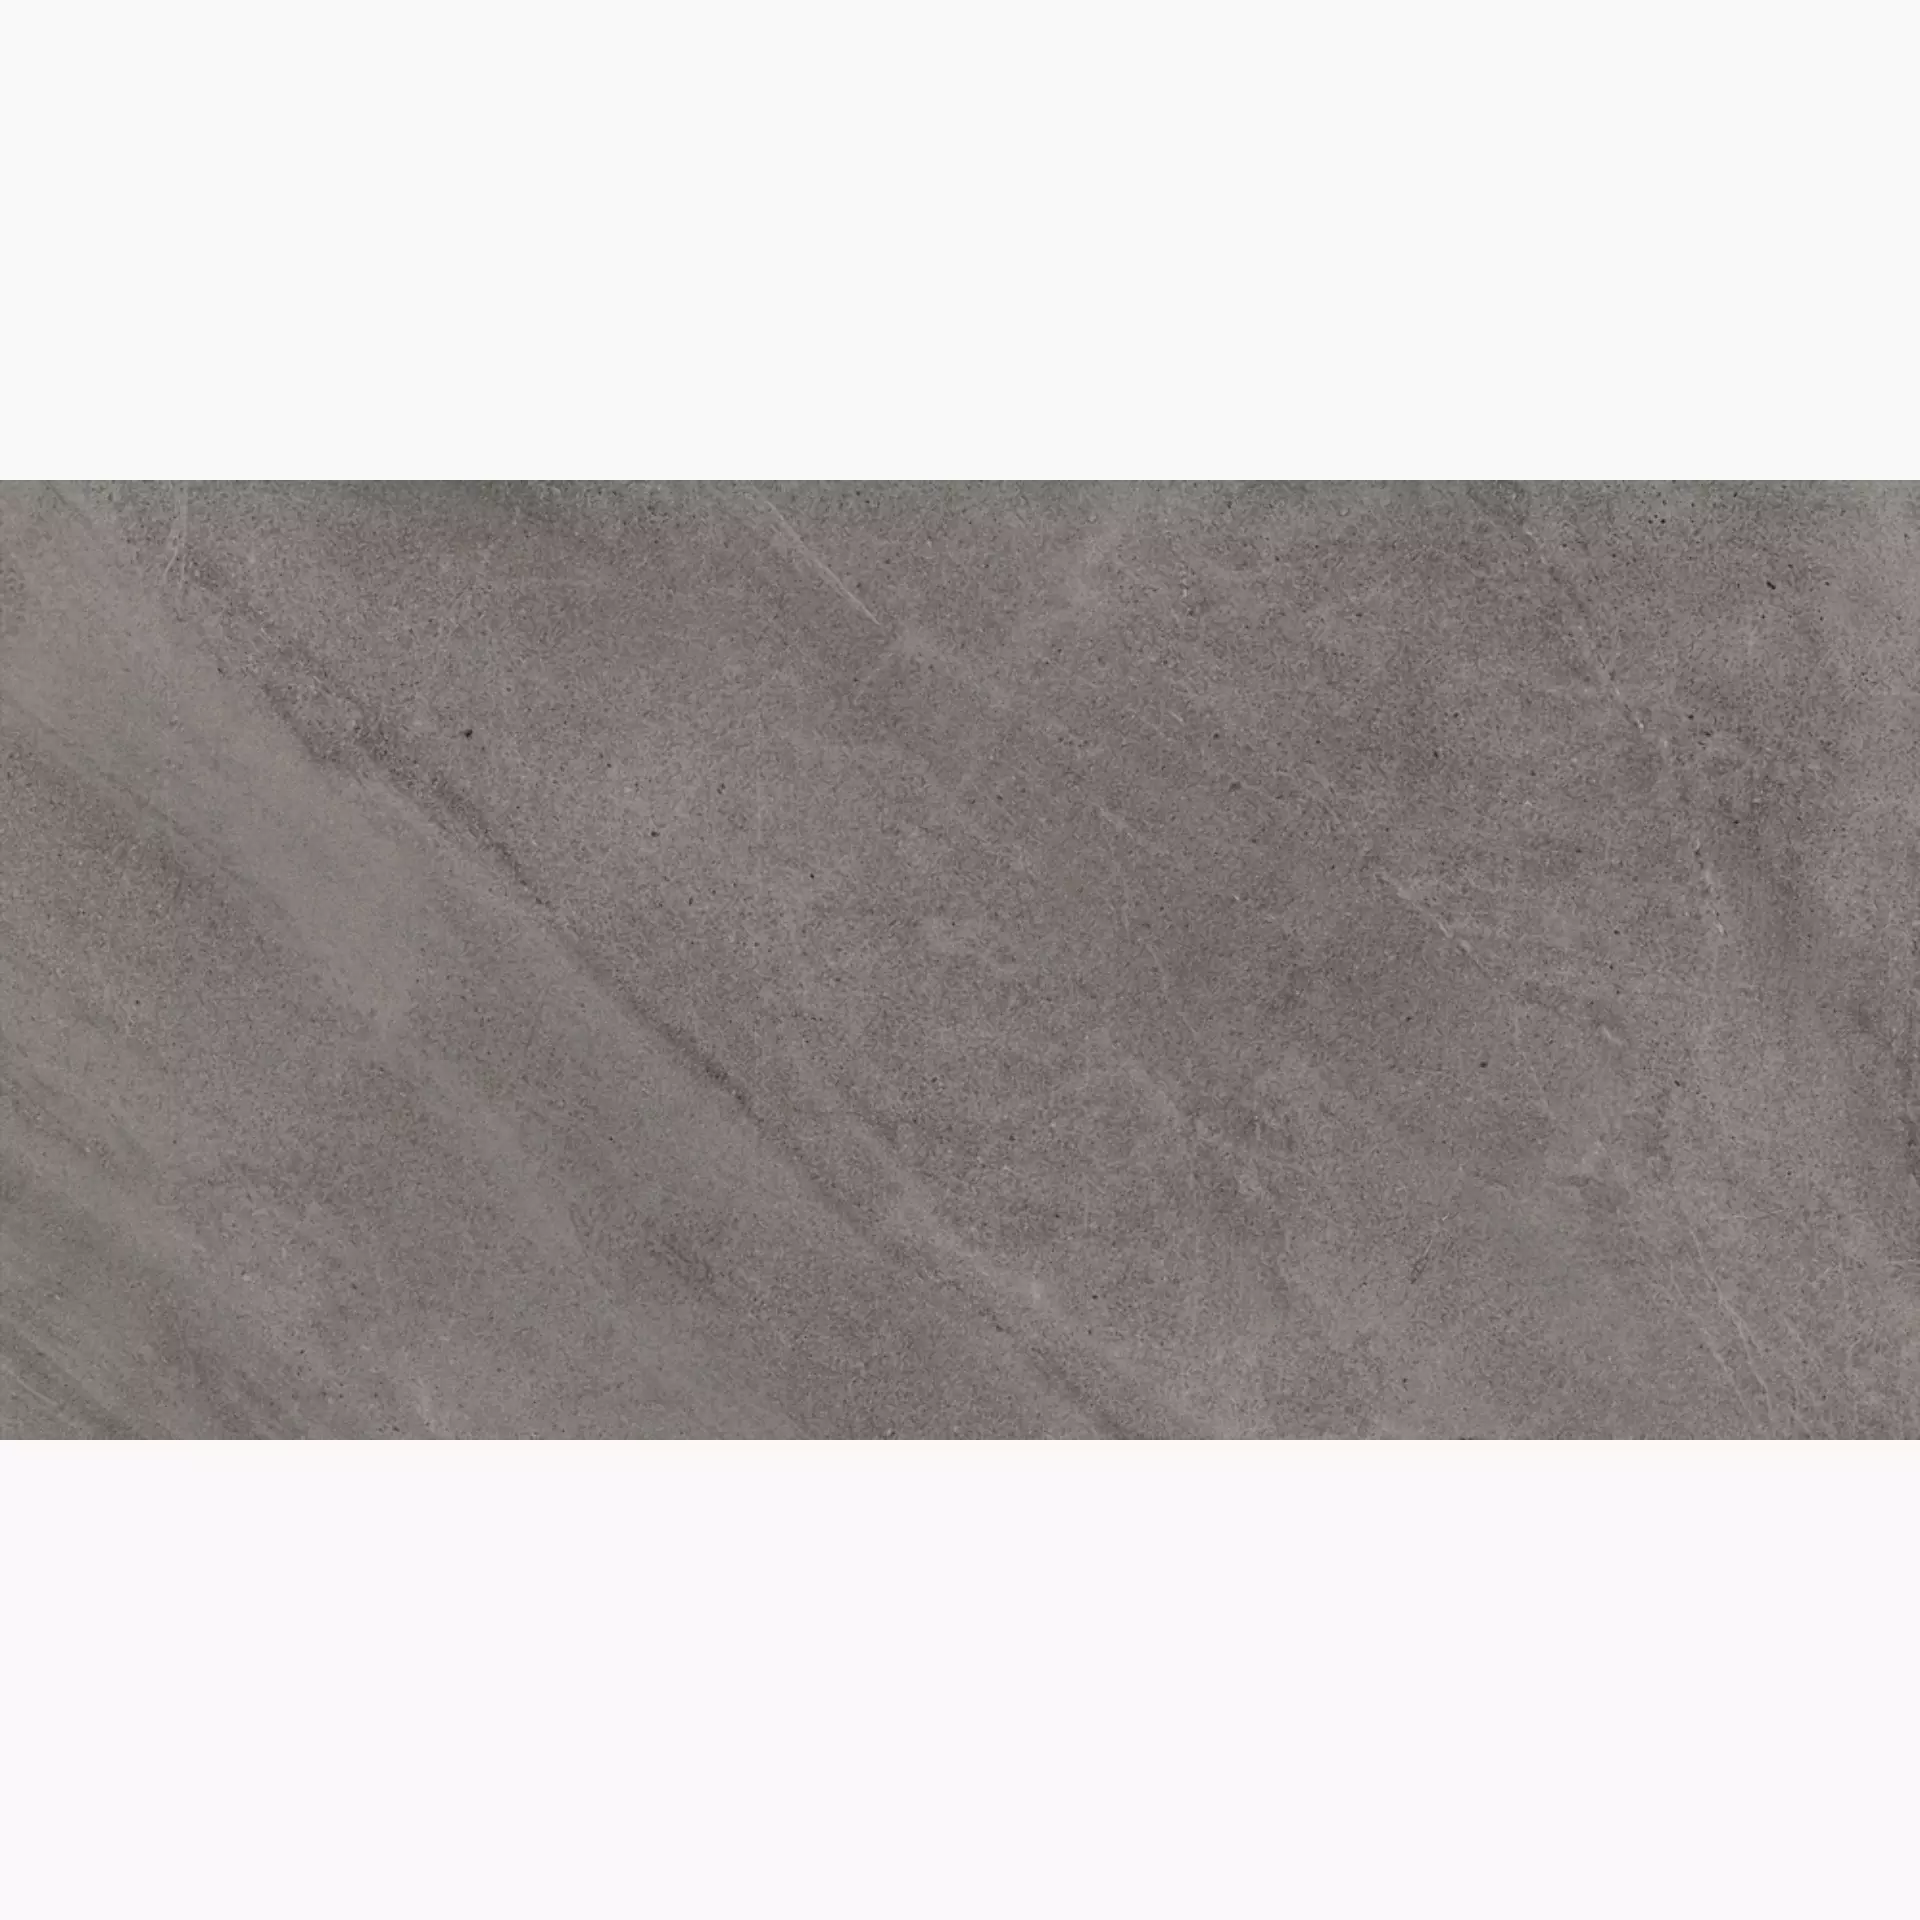 Cottodeste Limestone Slate Blazed Protect EGXLS35 60x120cm rectified 14mm